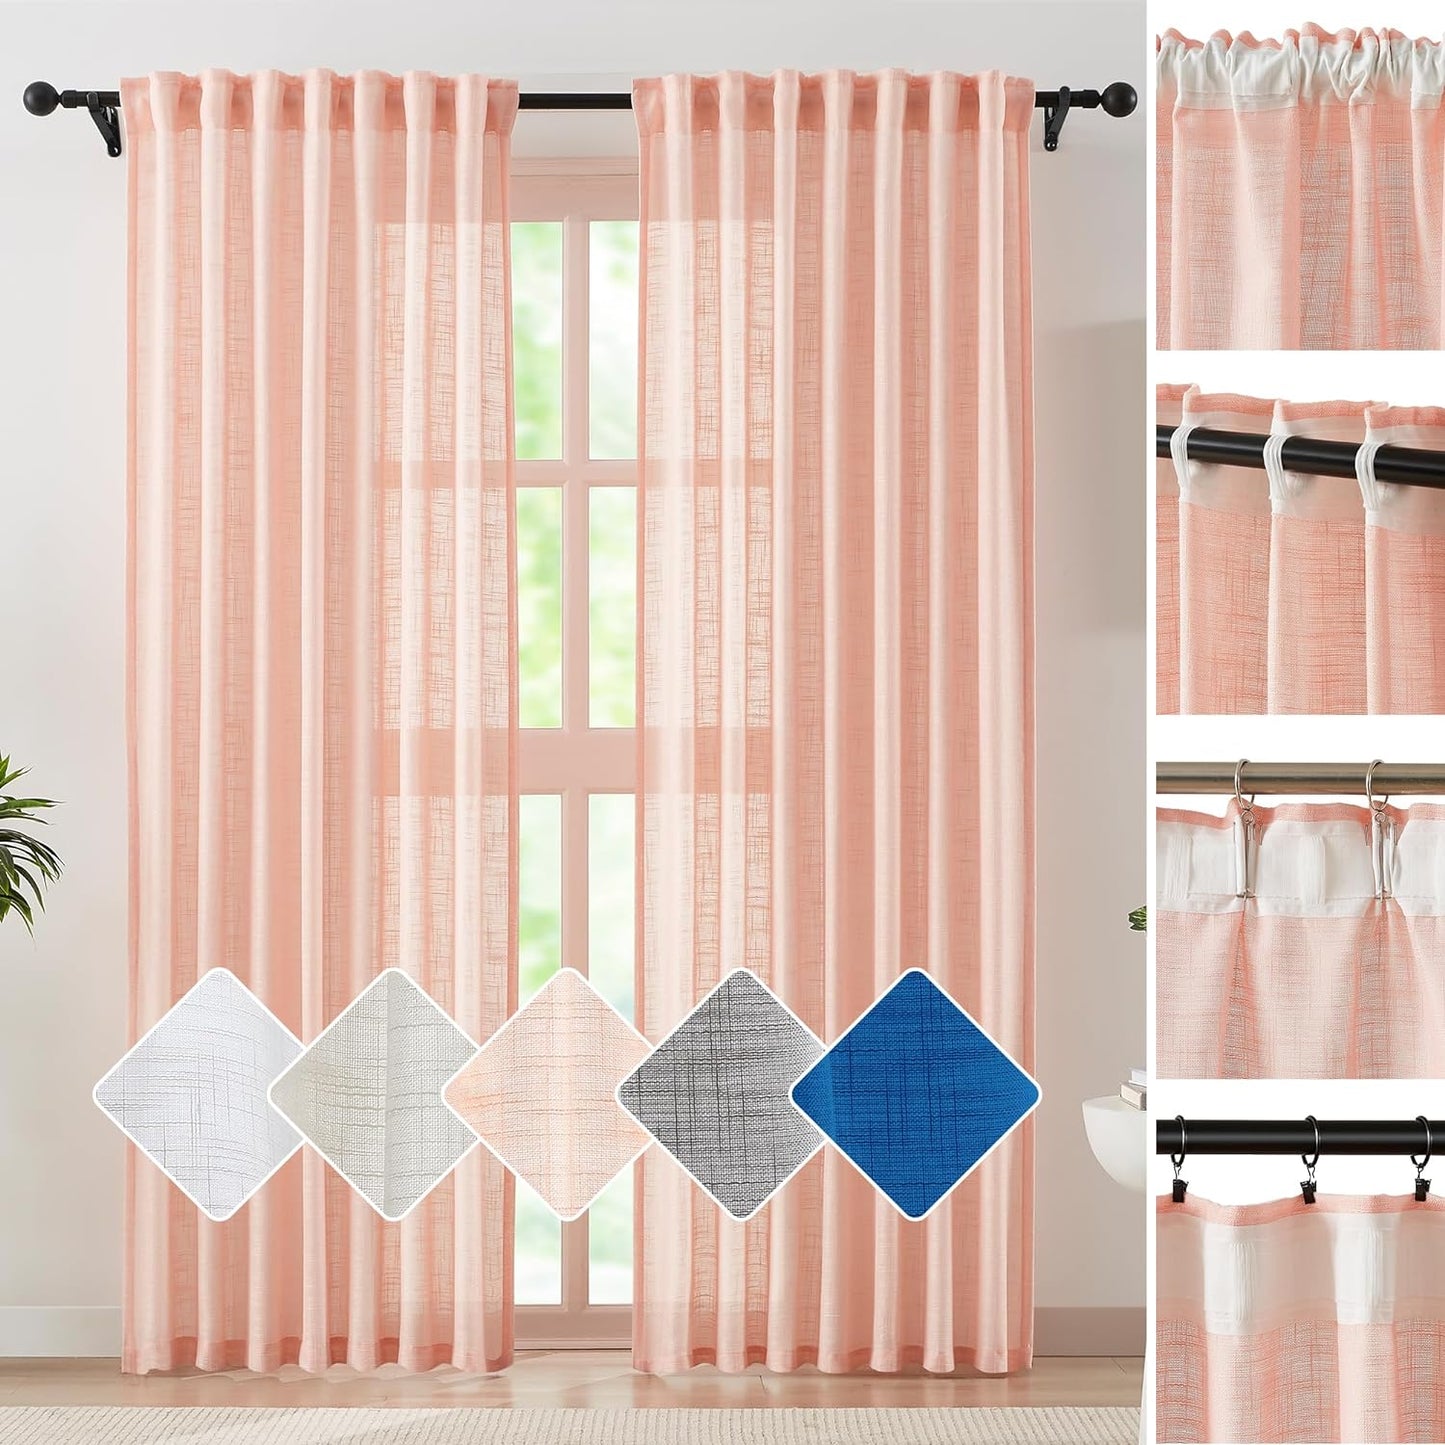 FMFUNCTEX Natural Semi-Sheer Curtains for Living Room Rich Linen Textured Look Window Curtain Draperies 52”W X63”L 2 Panels Grommet Top  Fmfunctex Multi Top - Coral/ Blush Pink 52" X 96" 2Pcs 